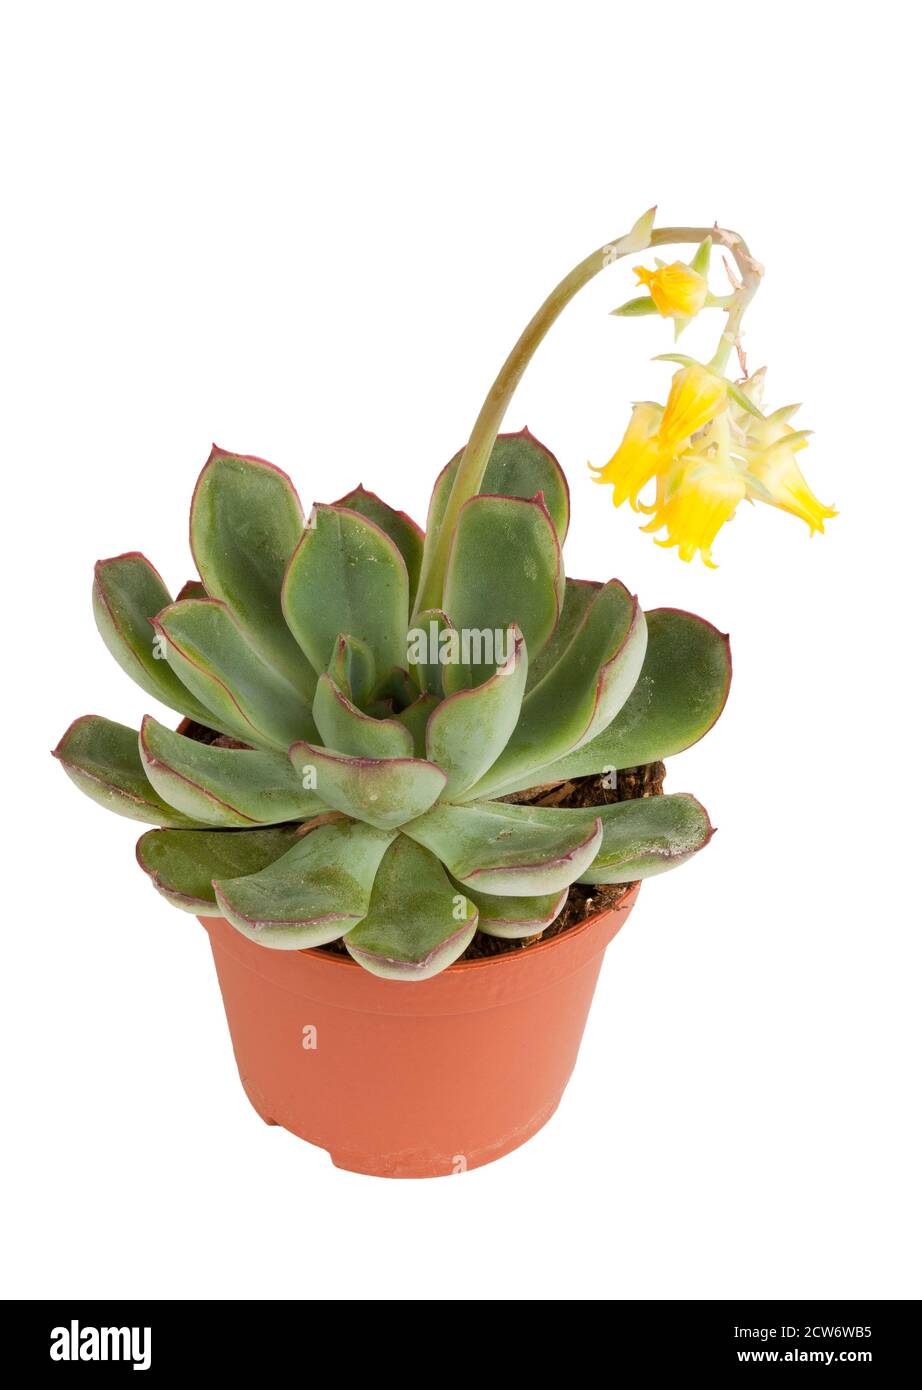 A single flowering Echeveria plant in a pot Stock Photo